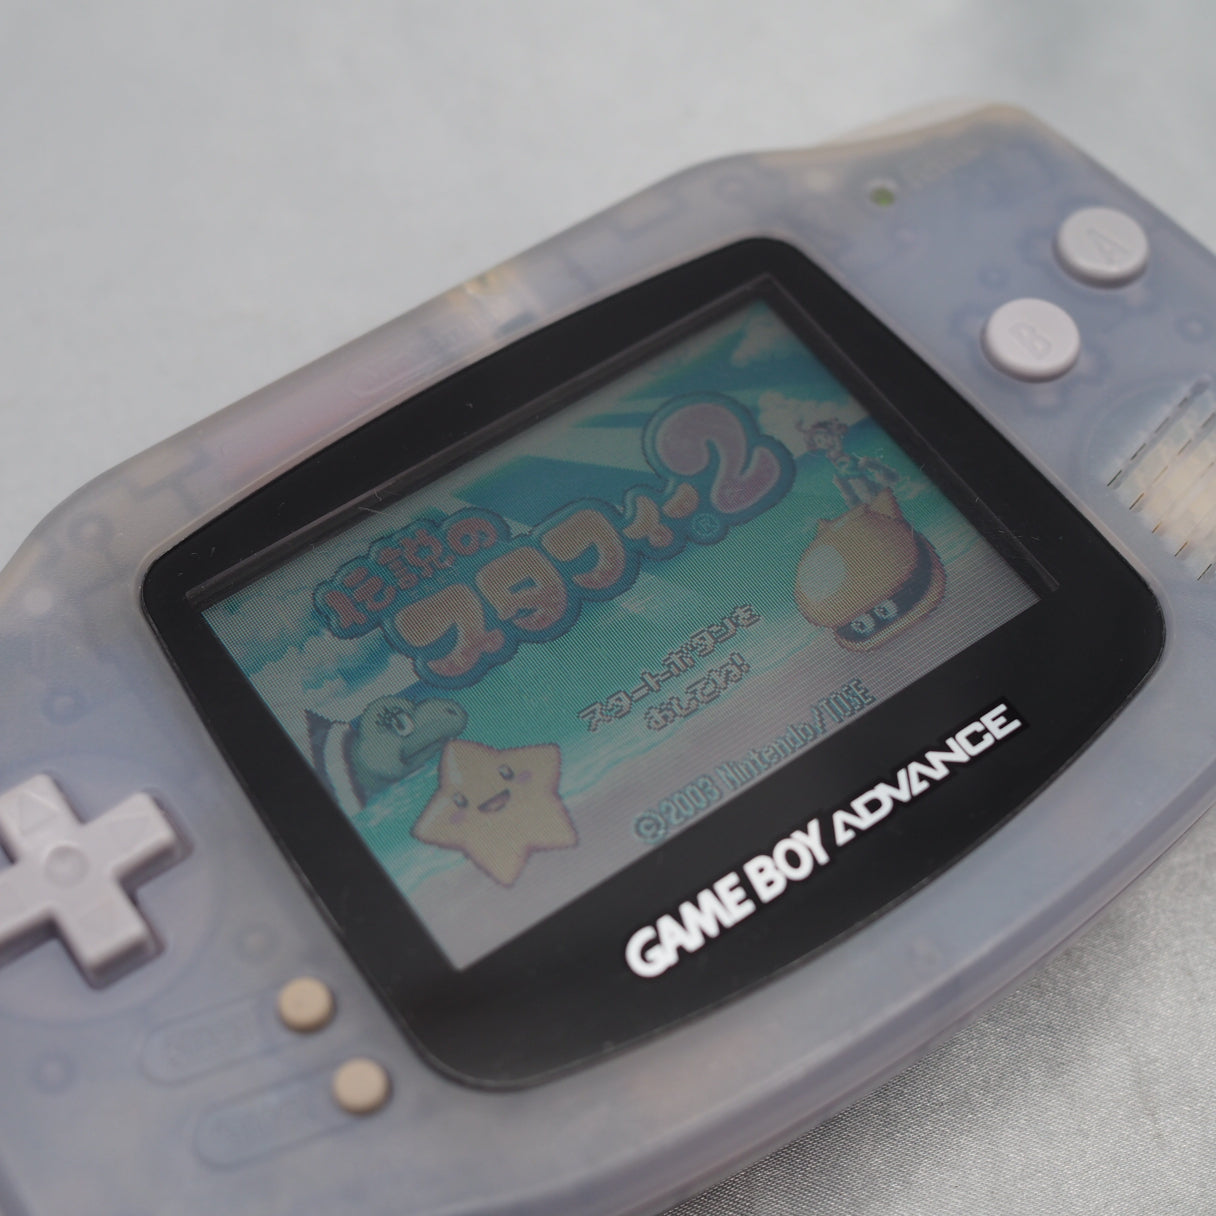 Nintendo Game Boy Advance [Milky blue]